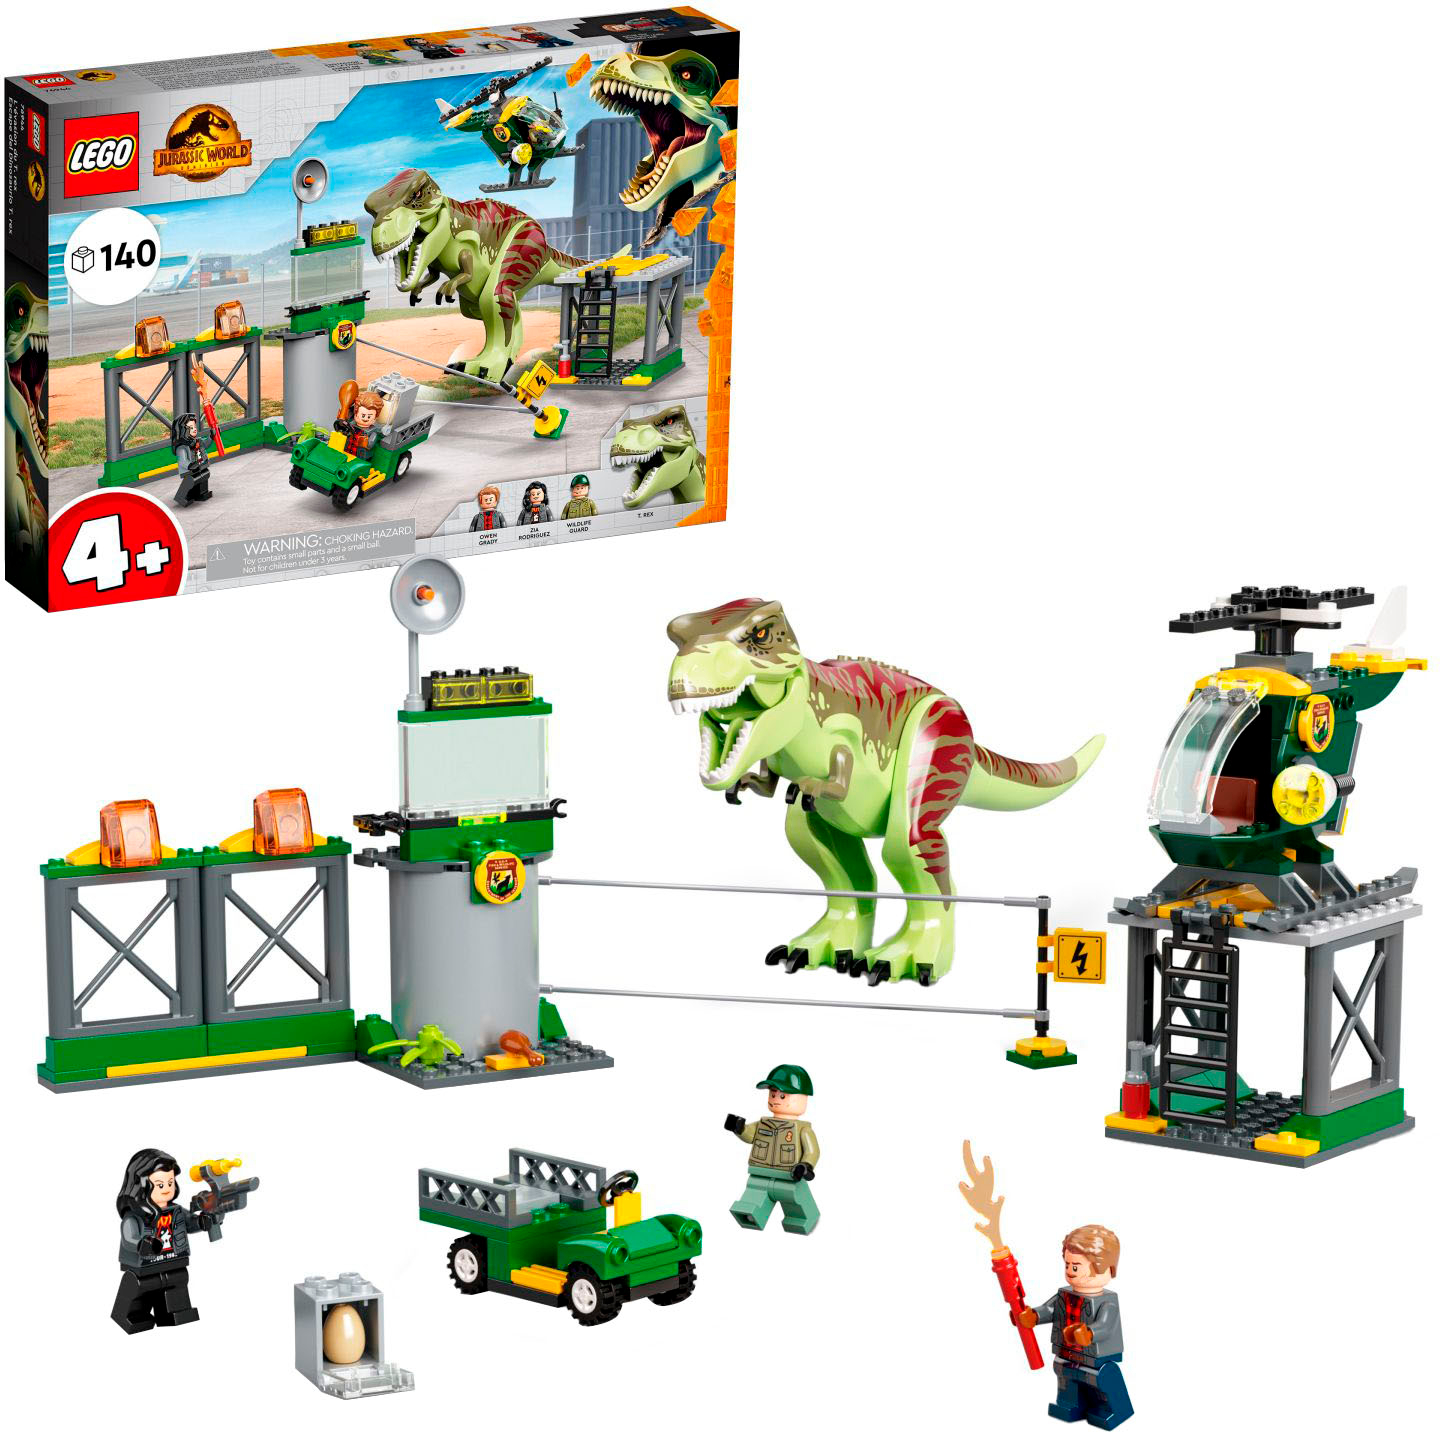 LEGO Jurassic World T. rex Dinosaur Breakout Toy Building Kit (140 6332793 - Best Buy